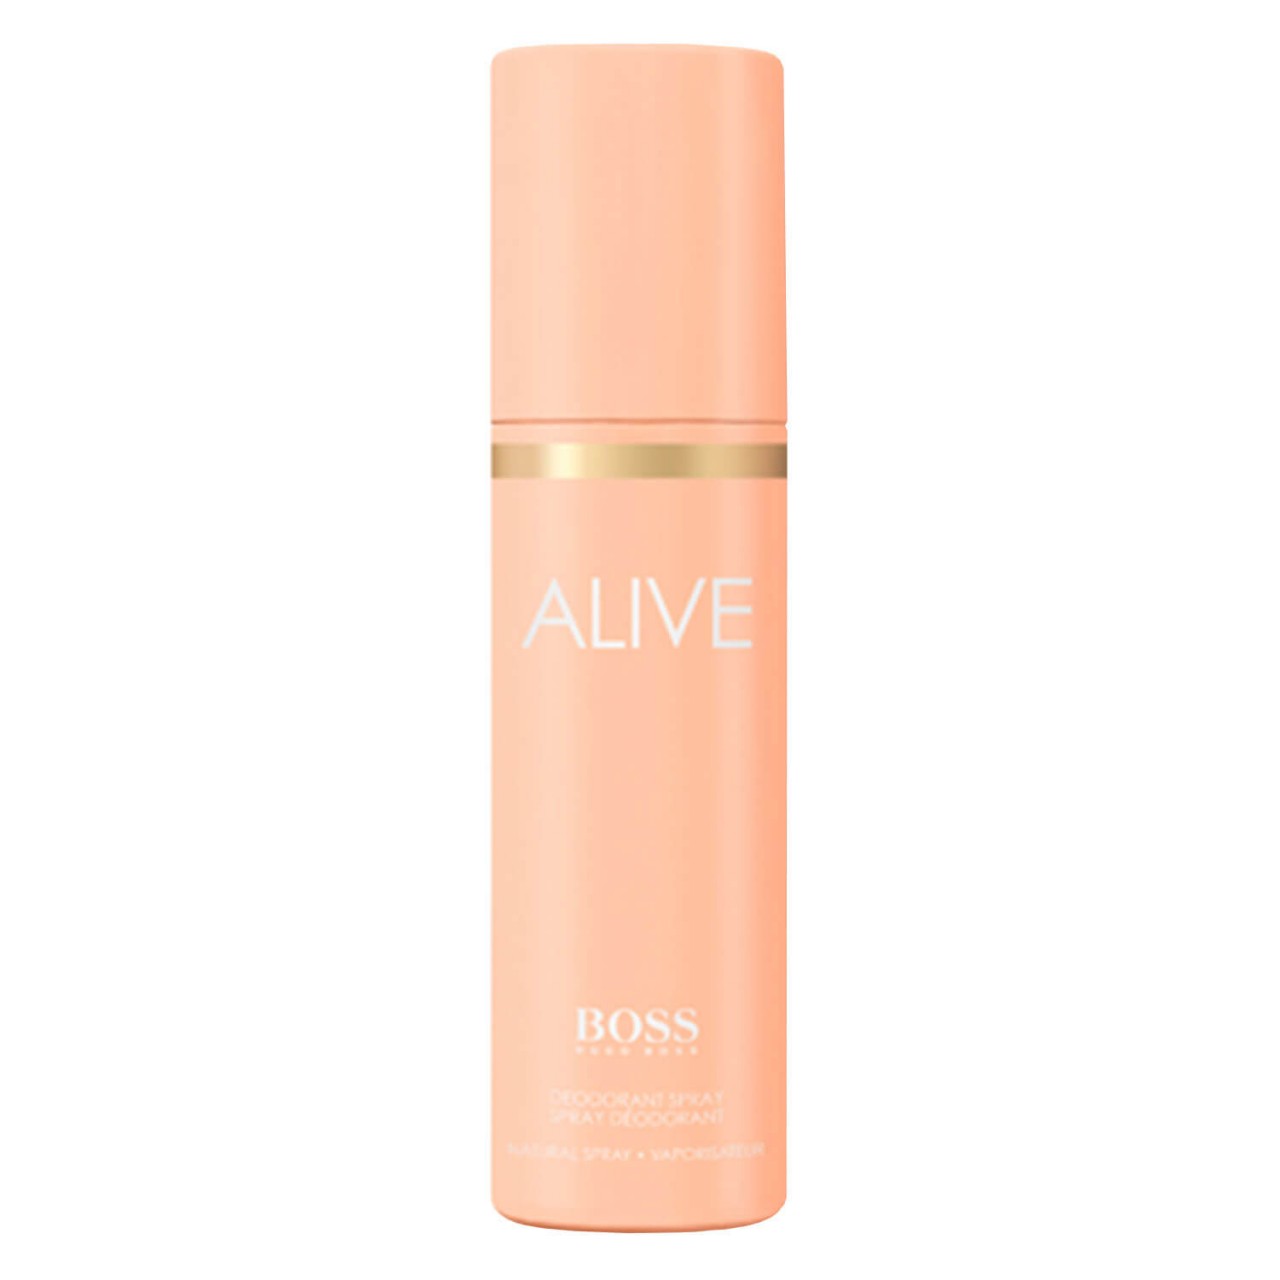 Boss Alive - Deodorant Spray von Hugo Boss